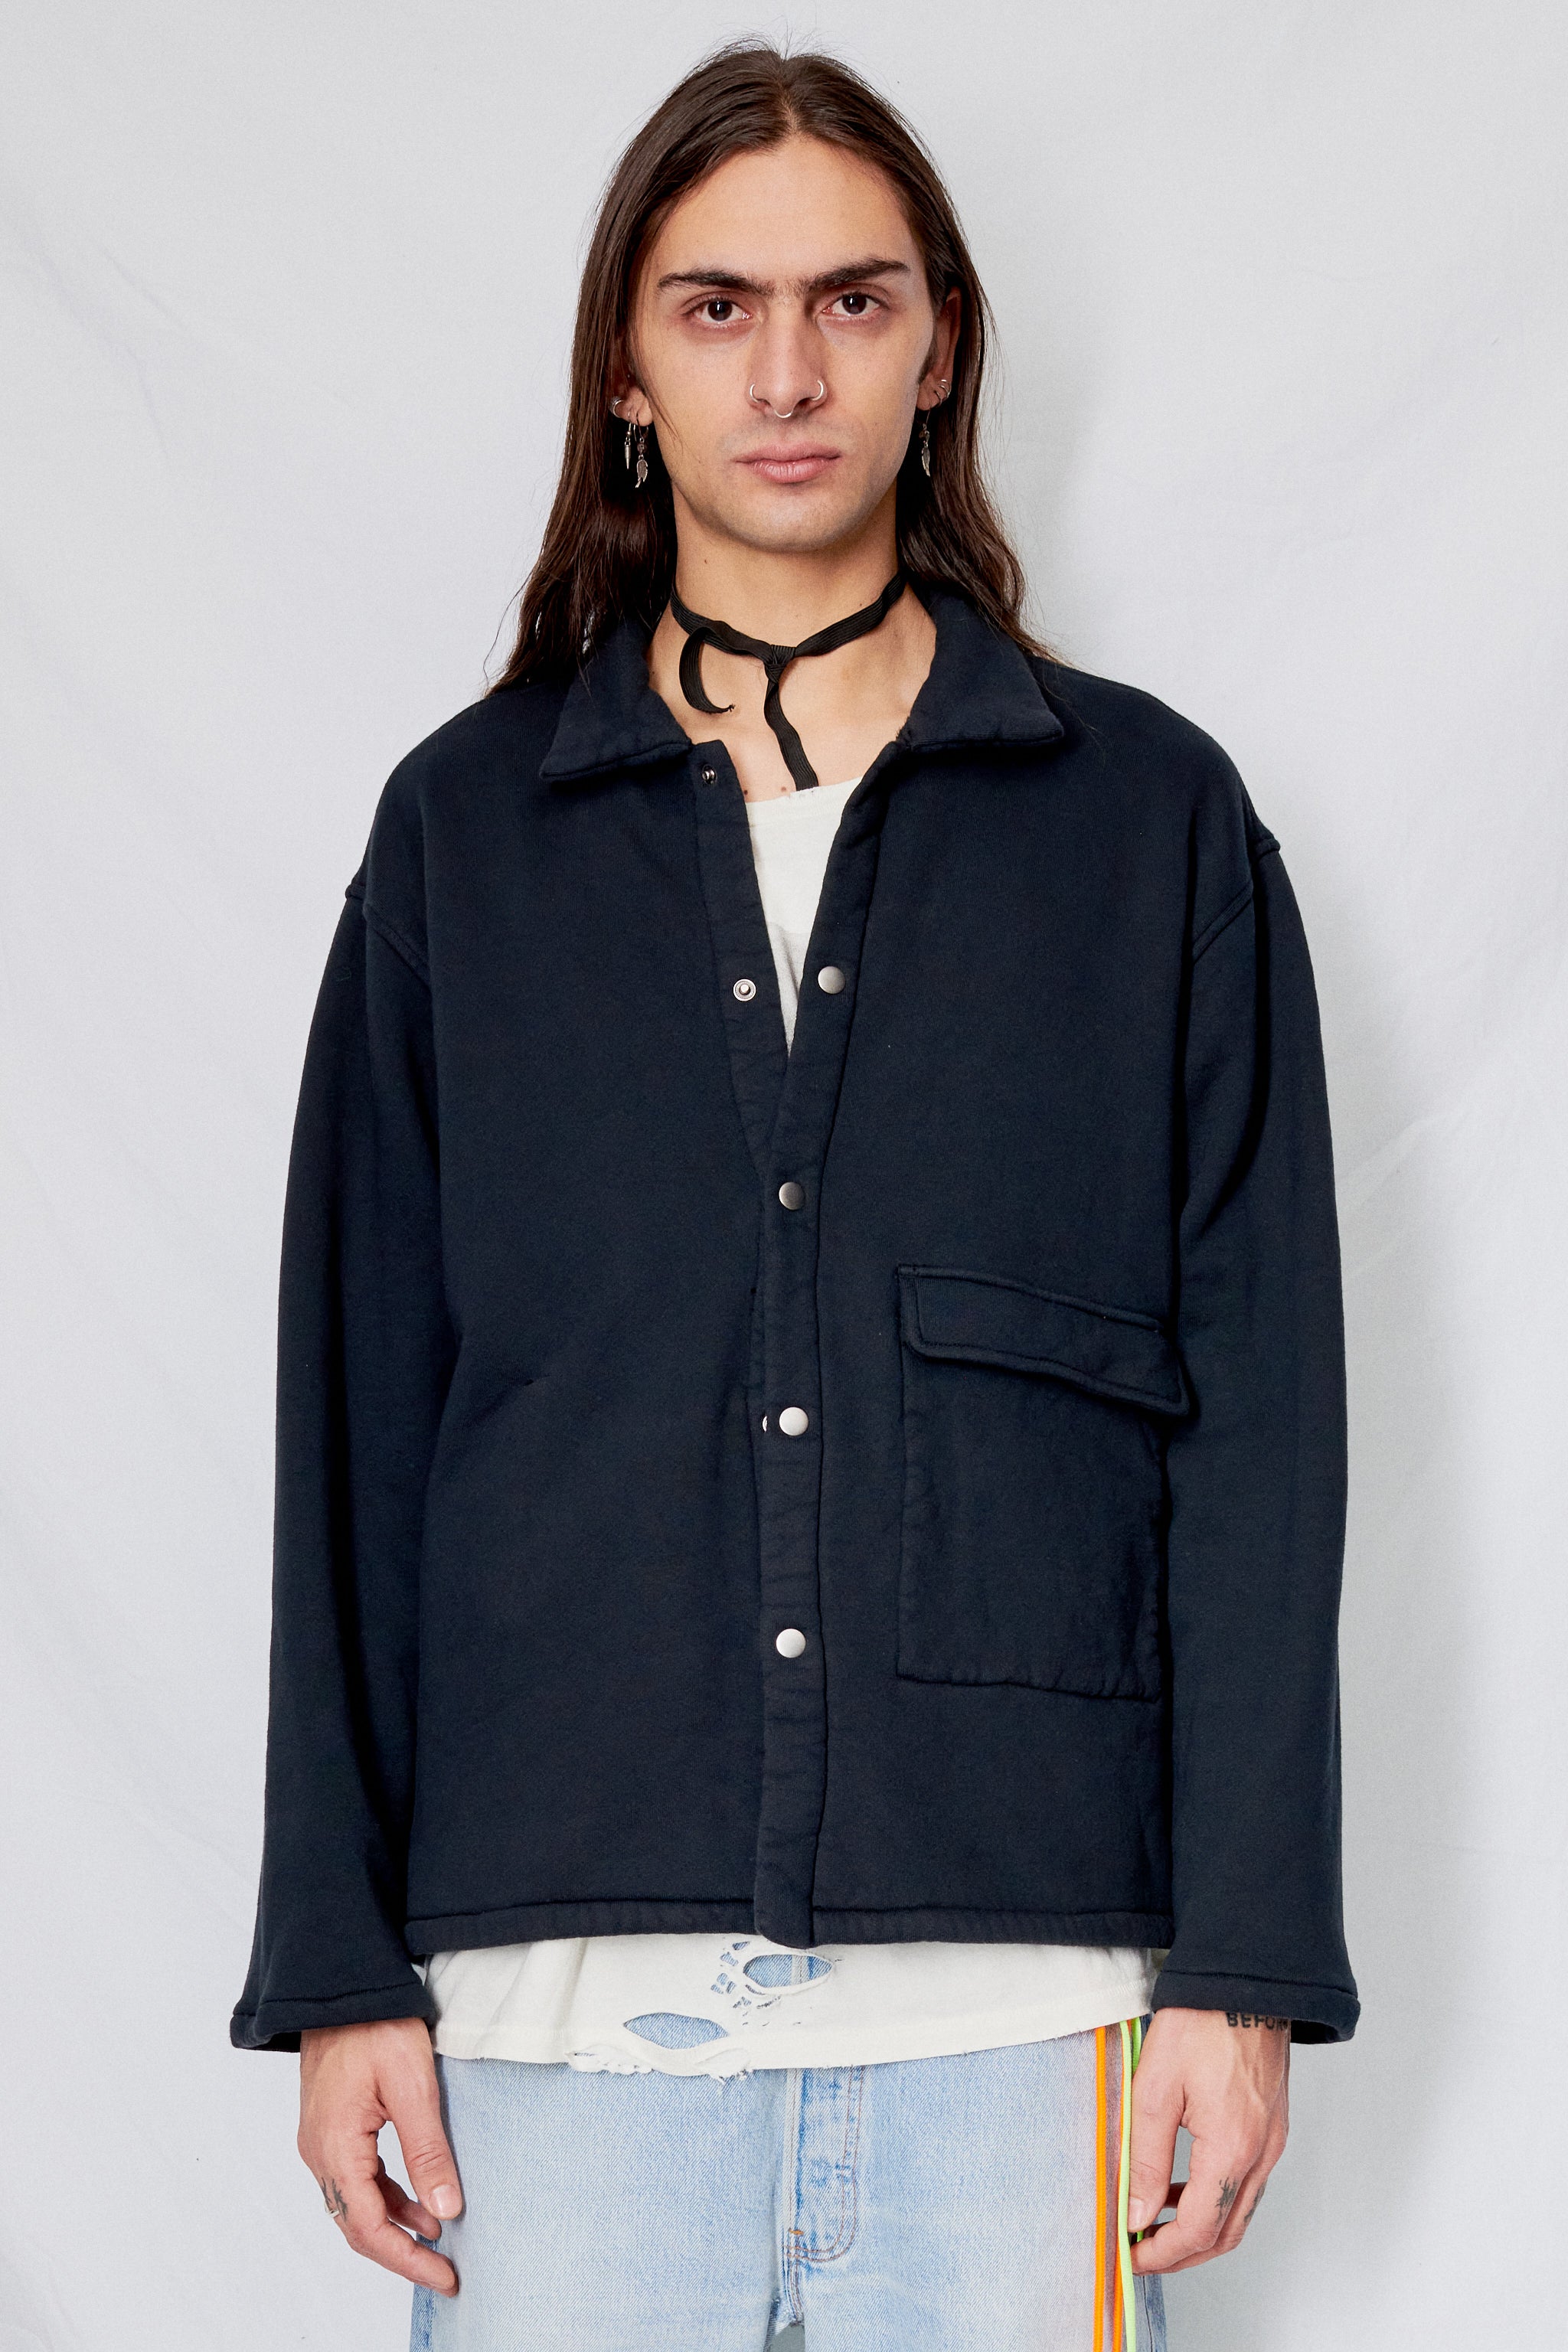 Black Fleece Snap Shirtcoat